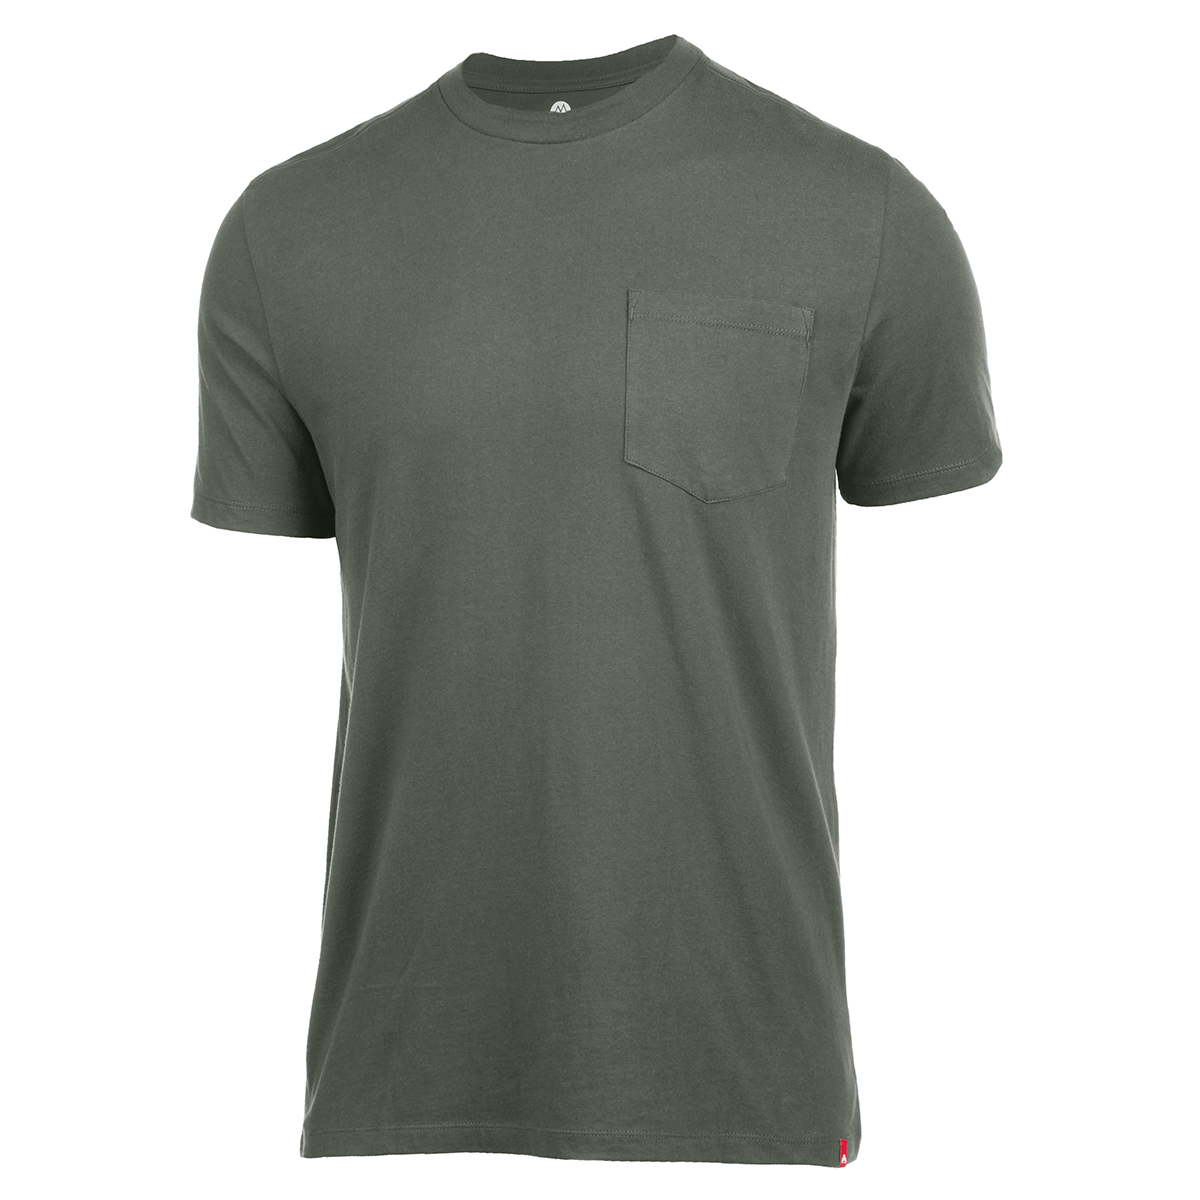 Ems Men's Organic Pocket Short-Sleeve Tee - Green, M